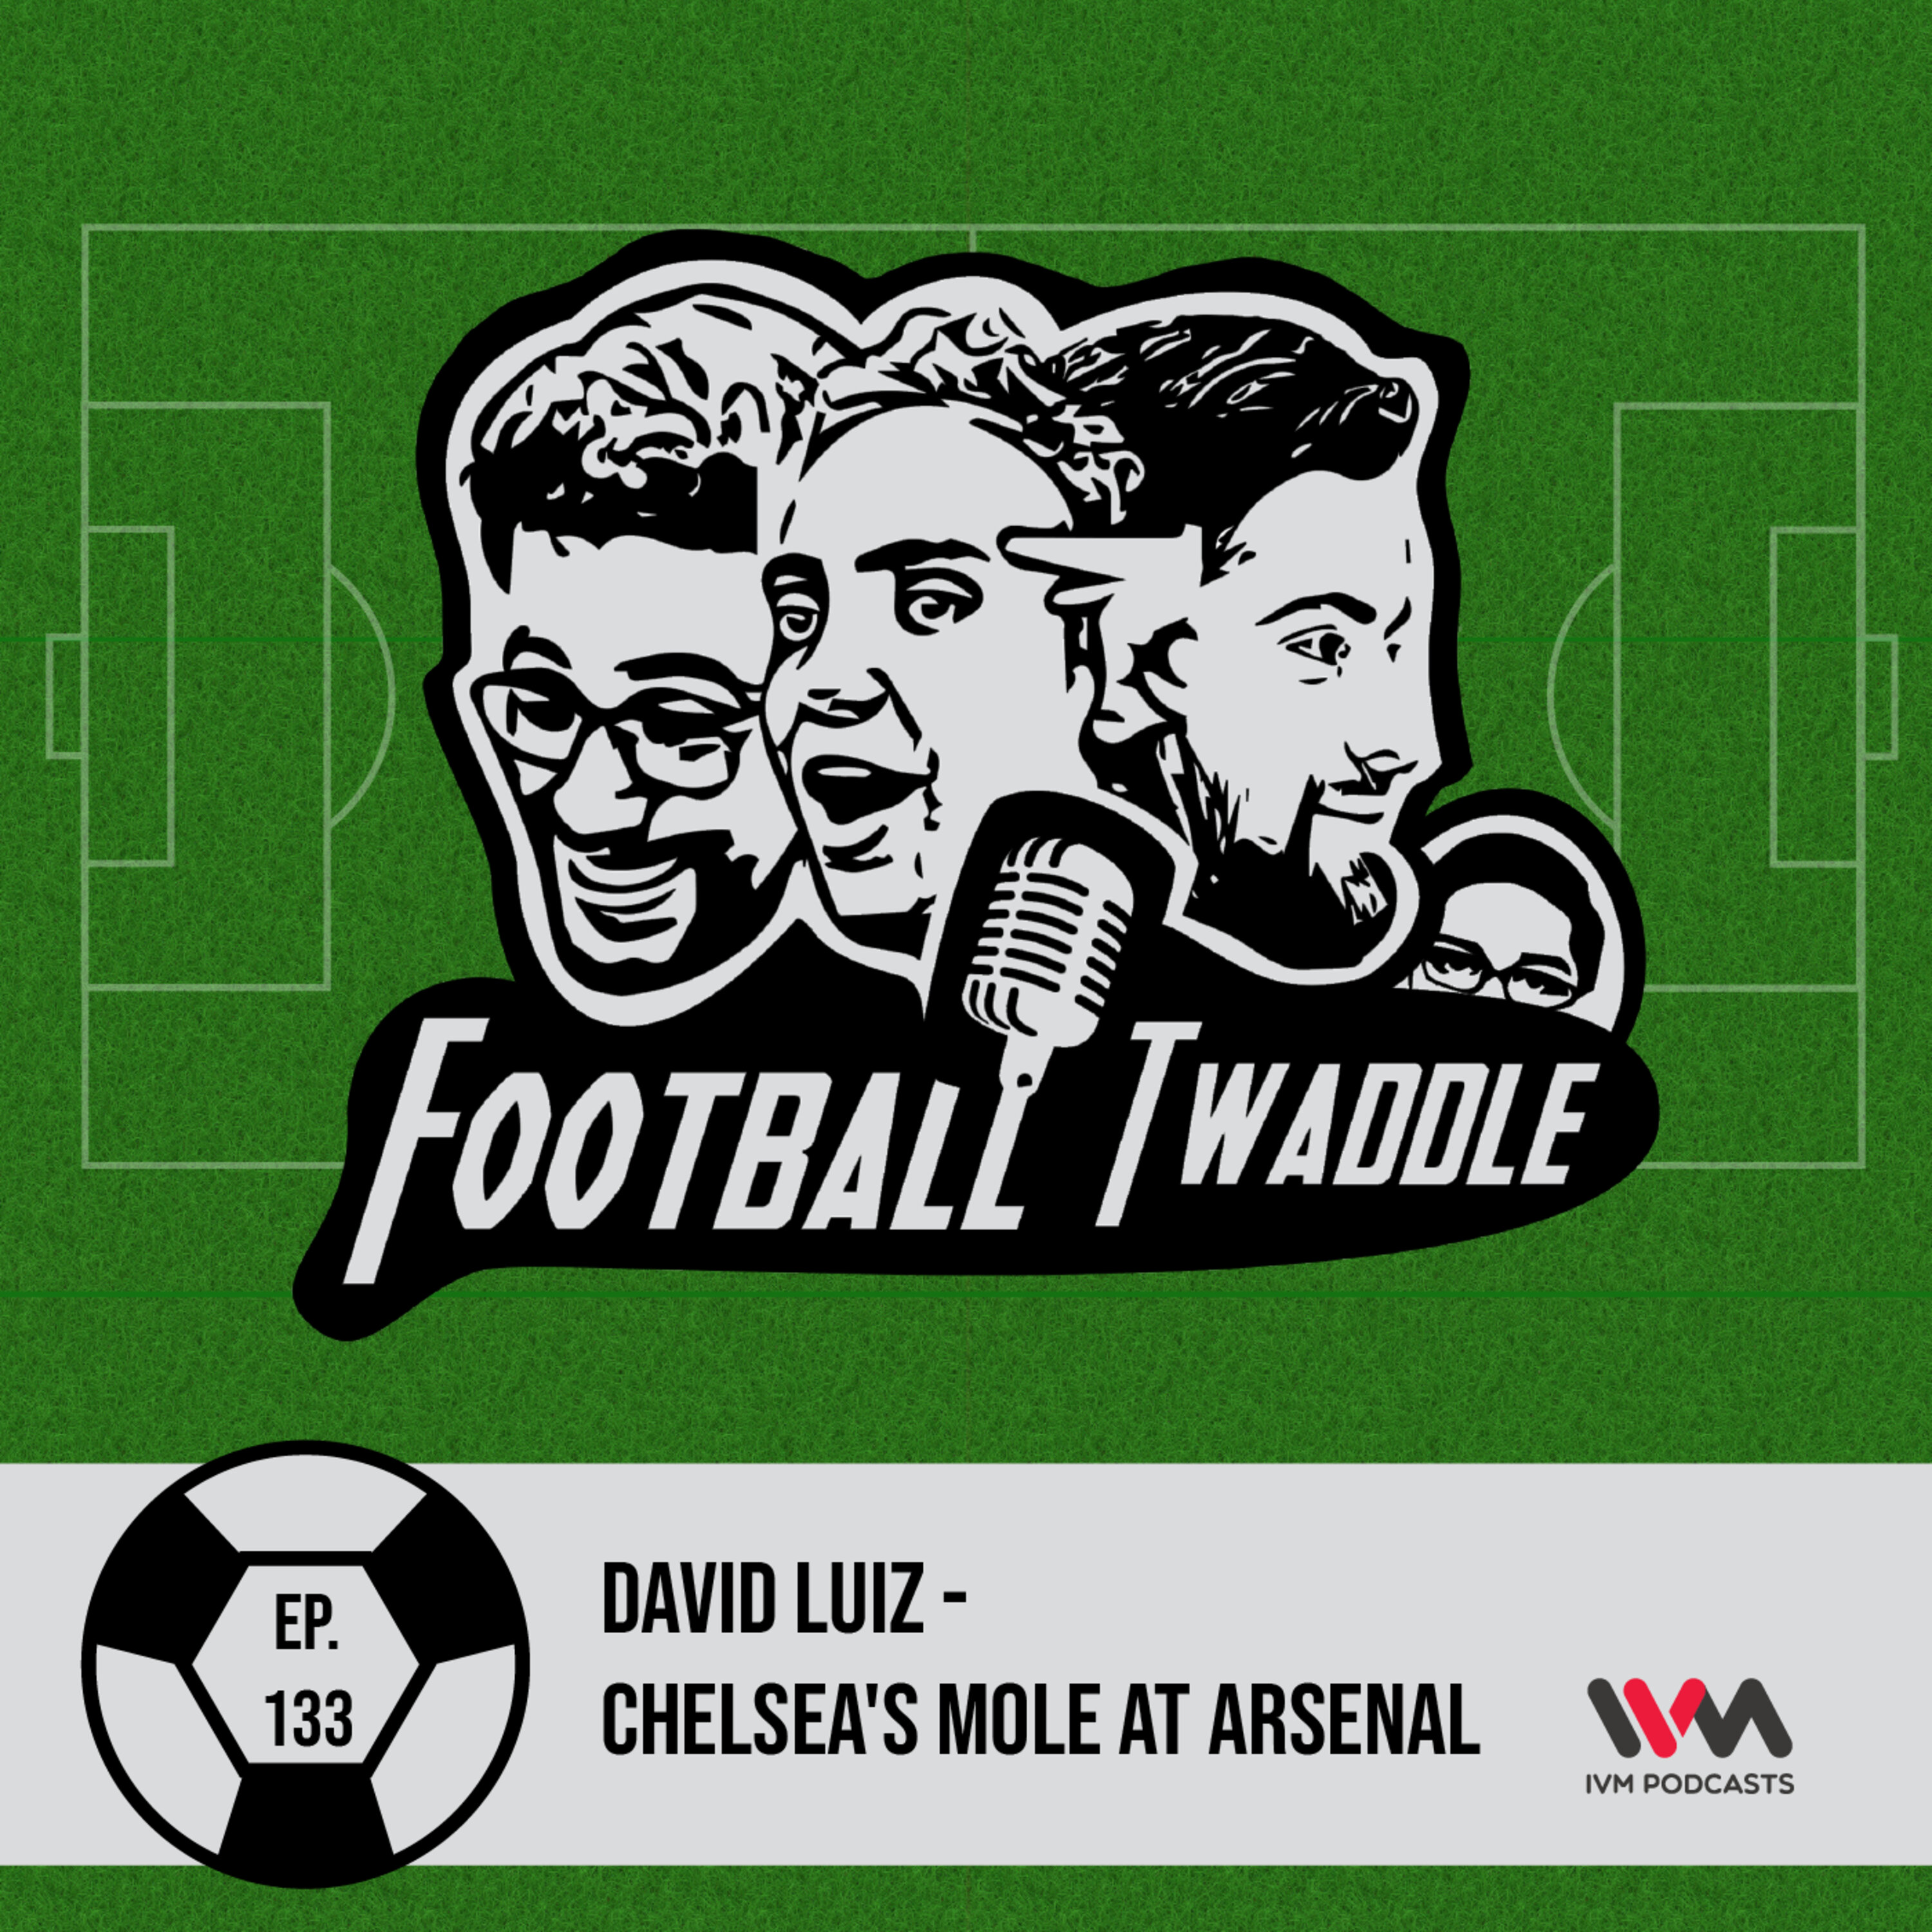 David Luiz - Chelsea's mole at Arsenal